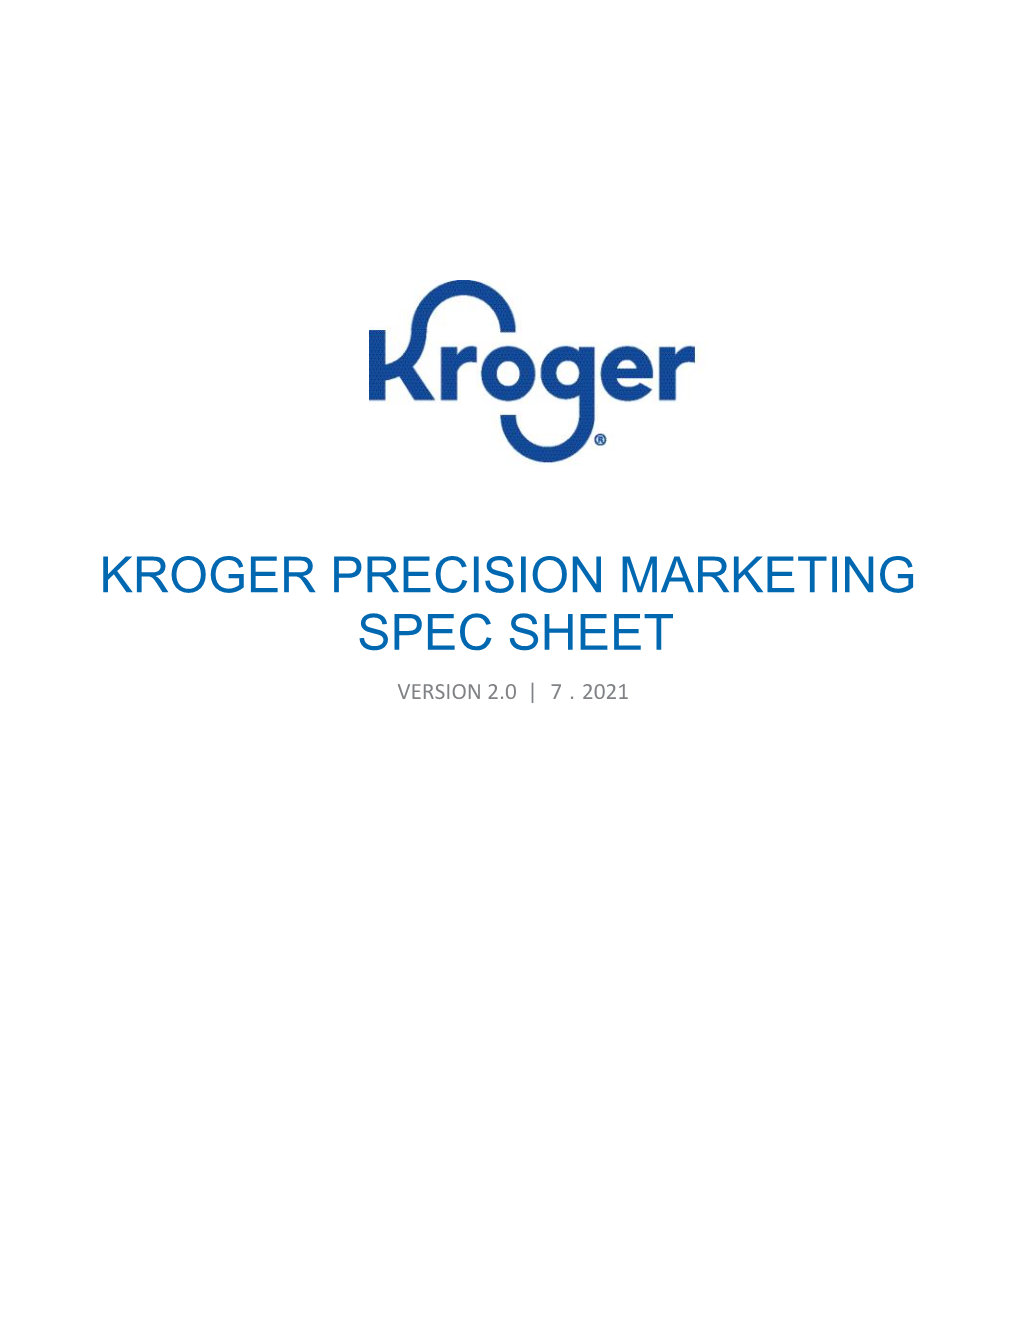 Kroger Precision Marketing Spec Sheet Version 2.0 | 7